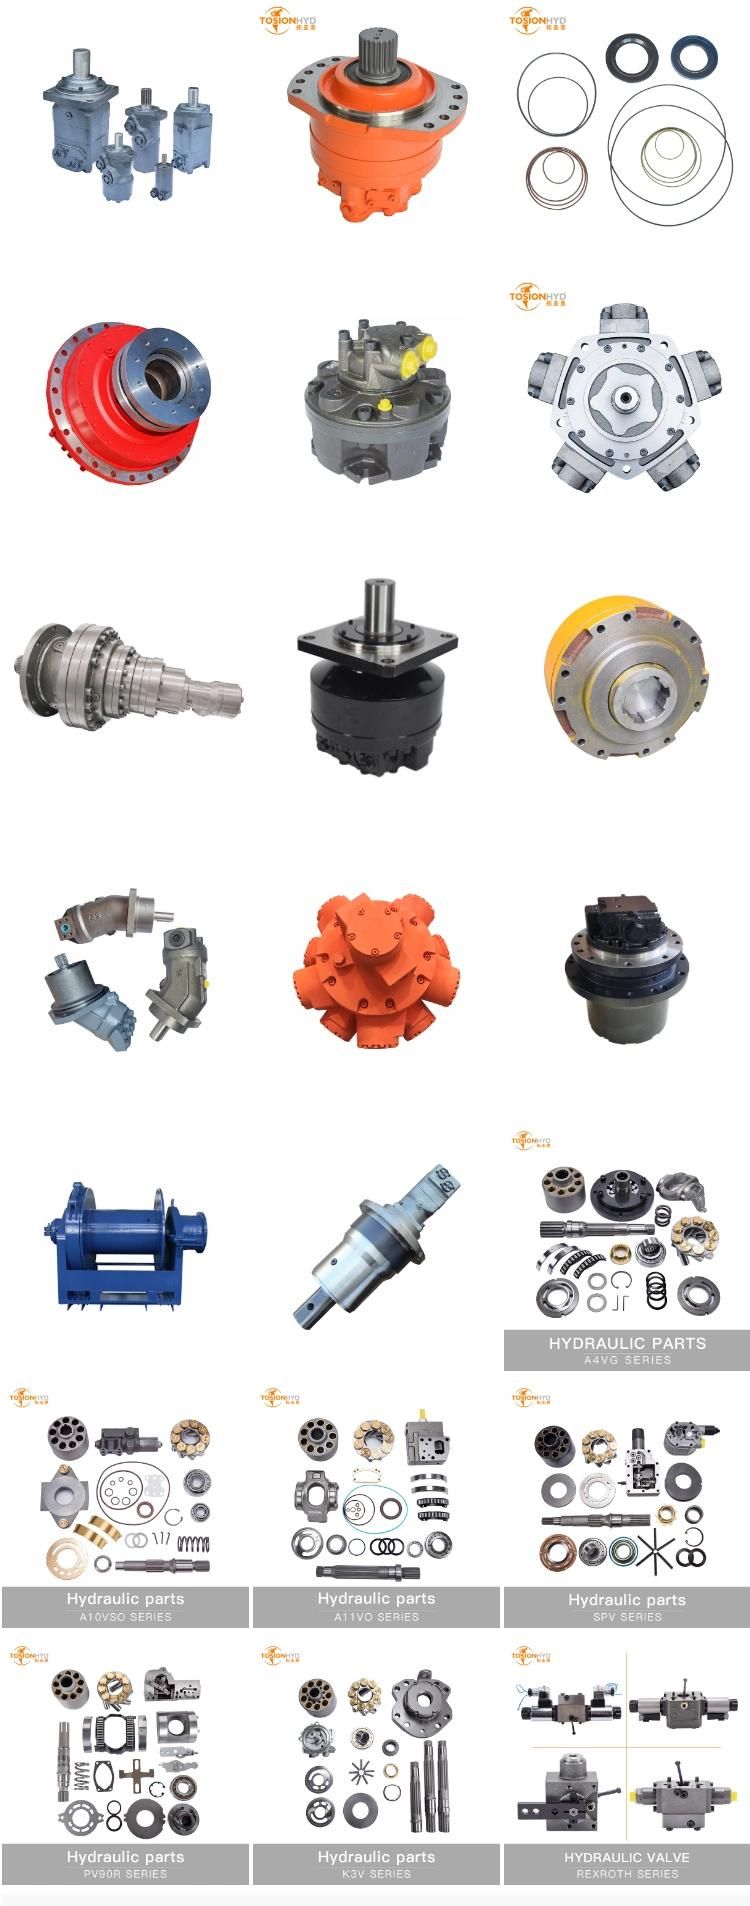 A7V200 A7V225 Hydraulic Pump Parts with Rexroth Spare Repair Kits